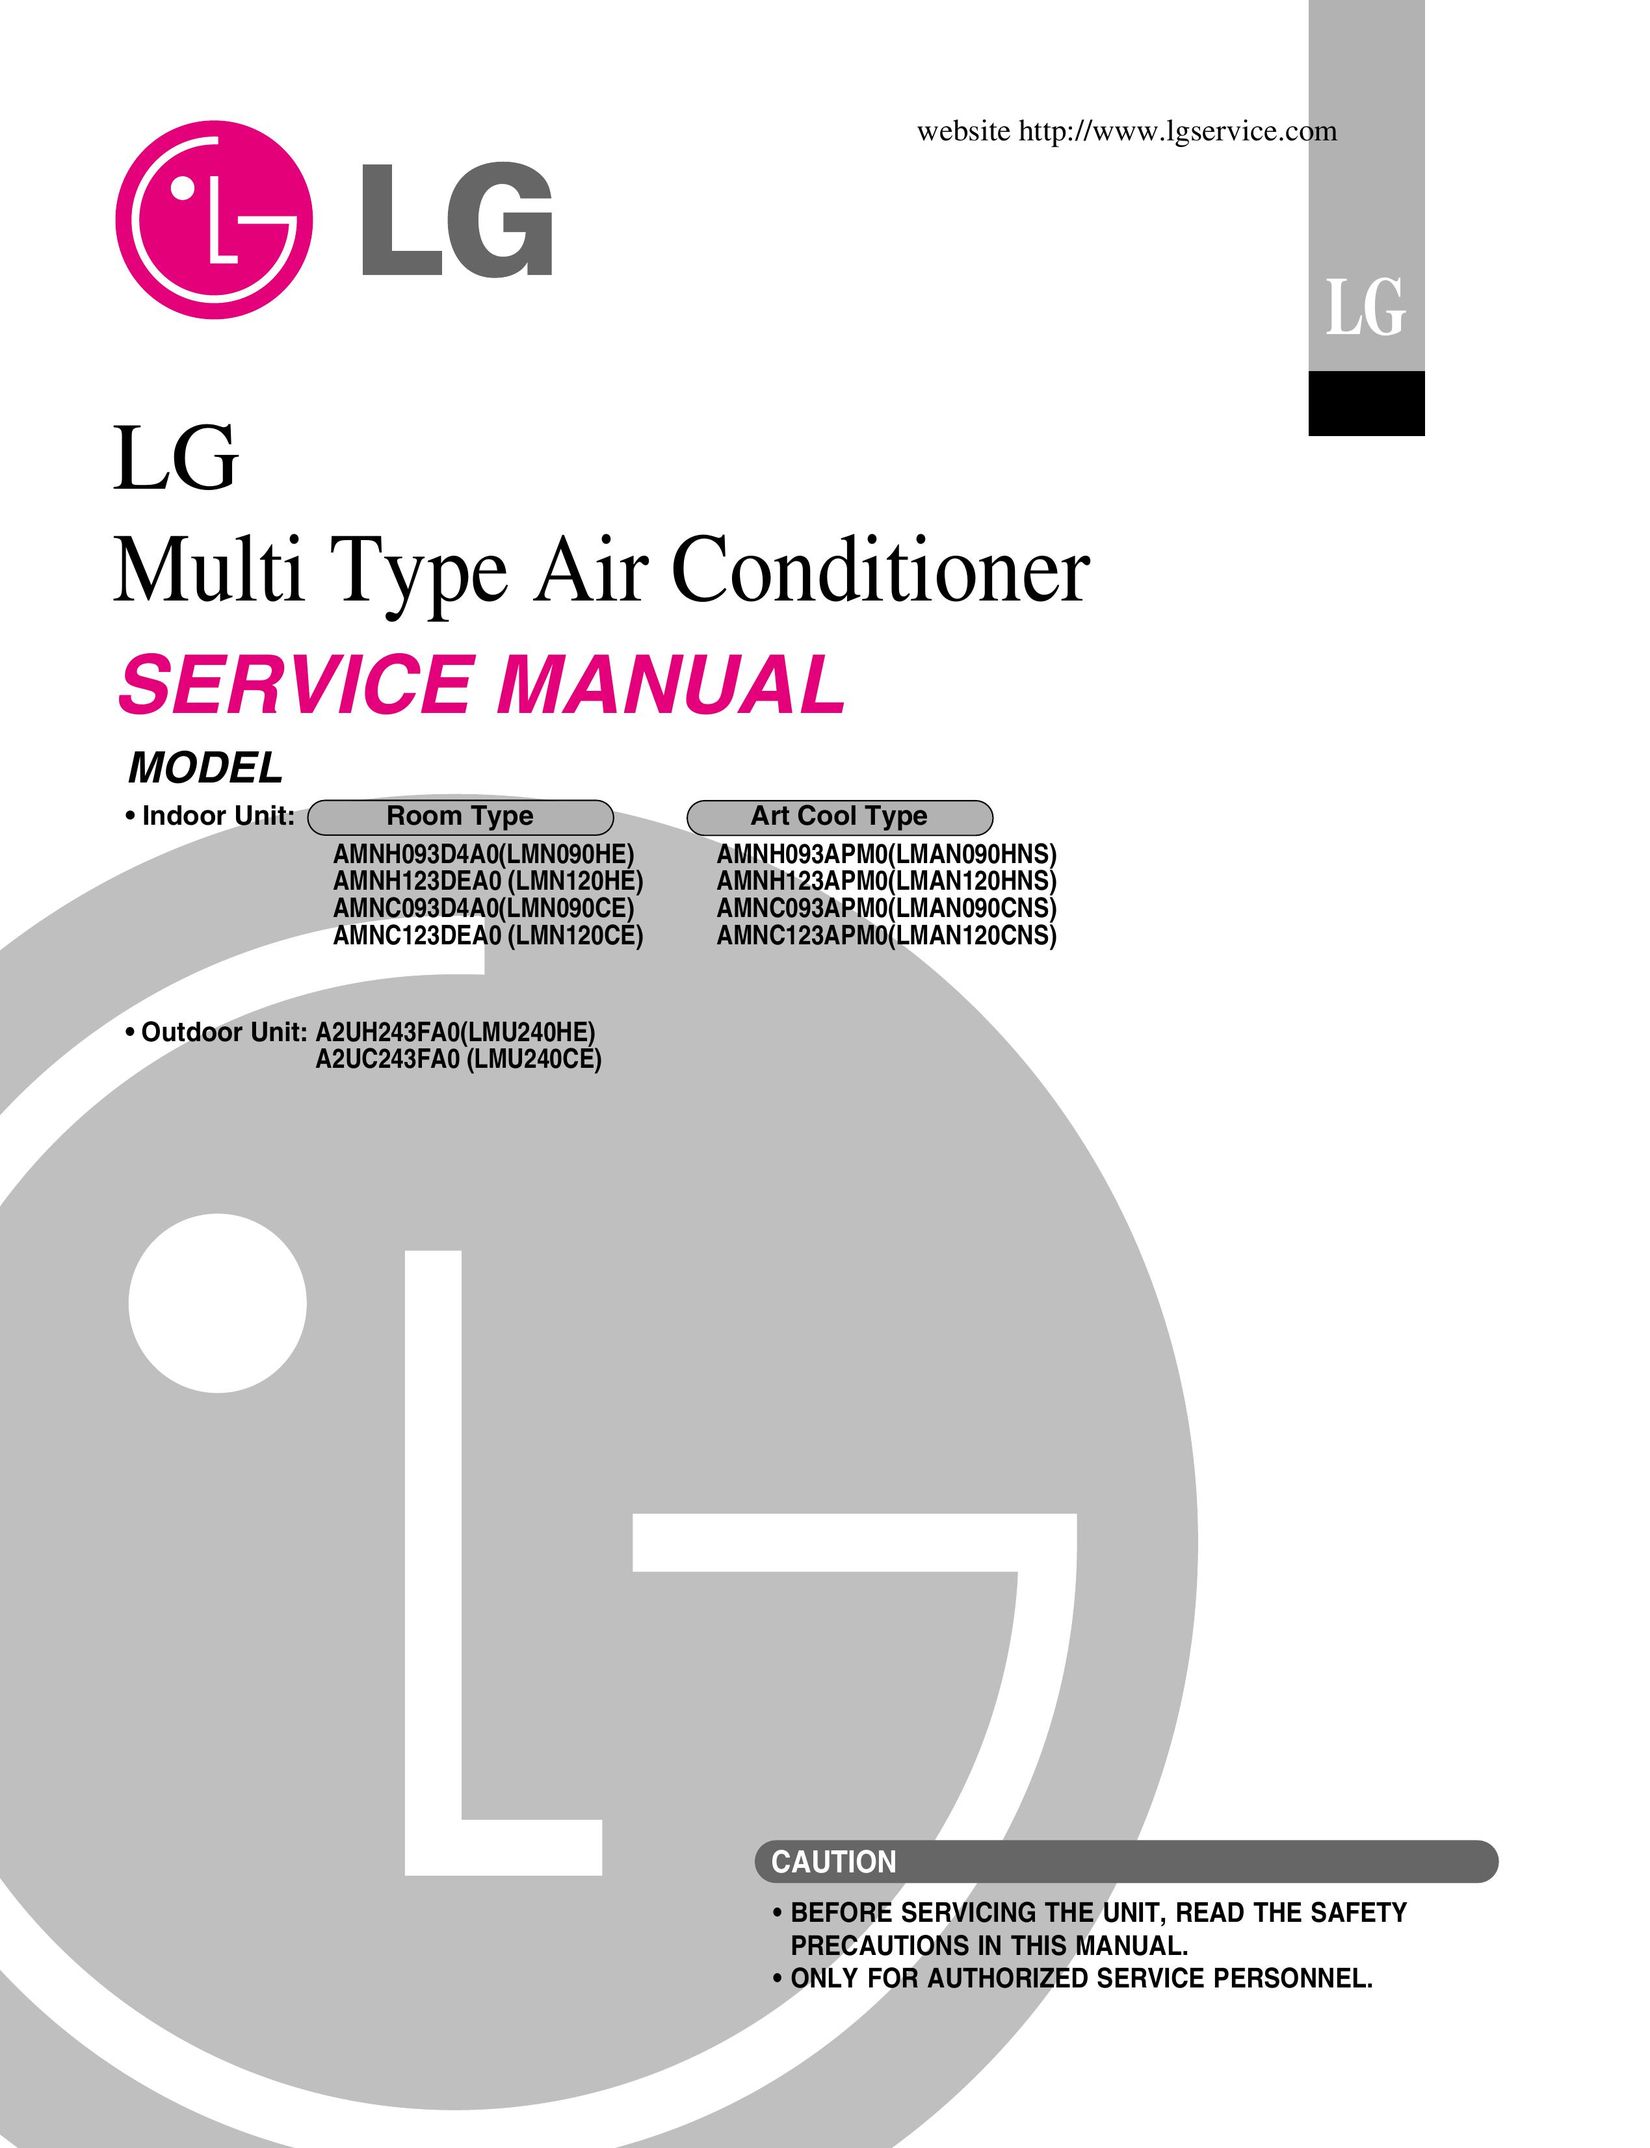 LG Electronics A2UC243FA0 (LMU240CE) Air Conditioner User Manual